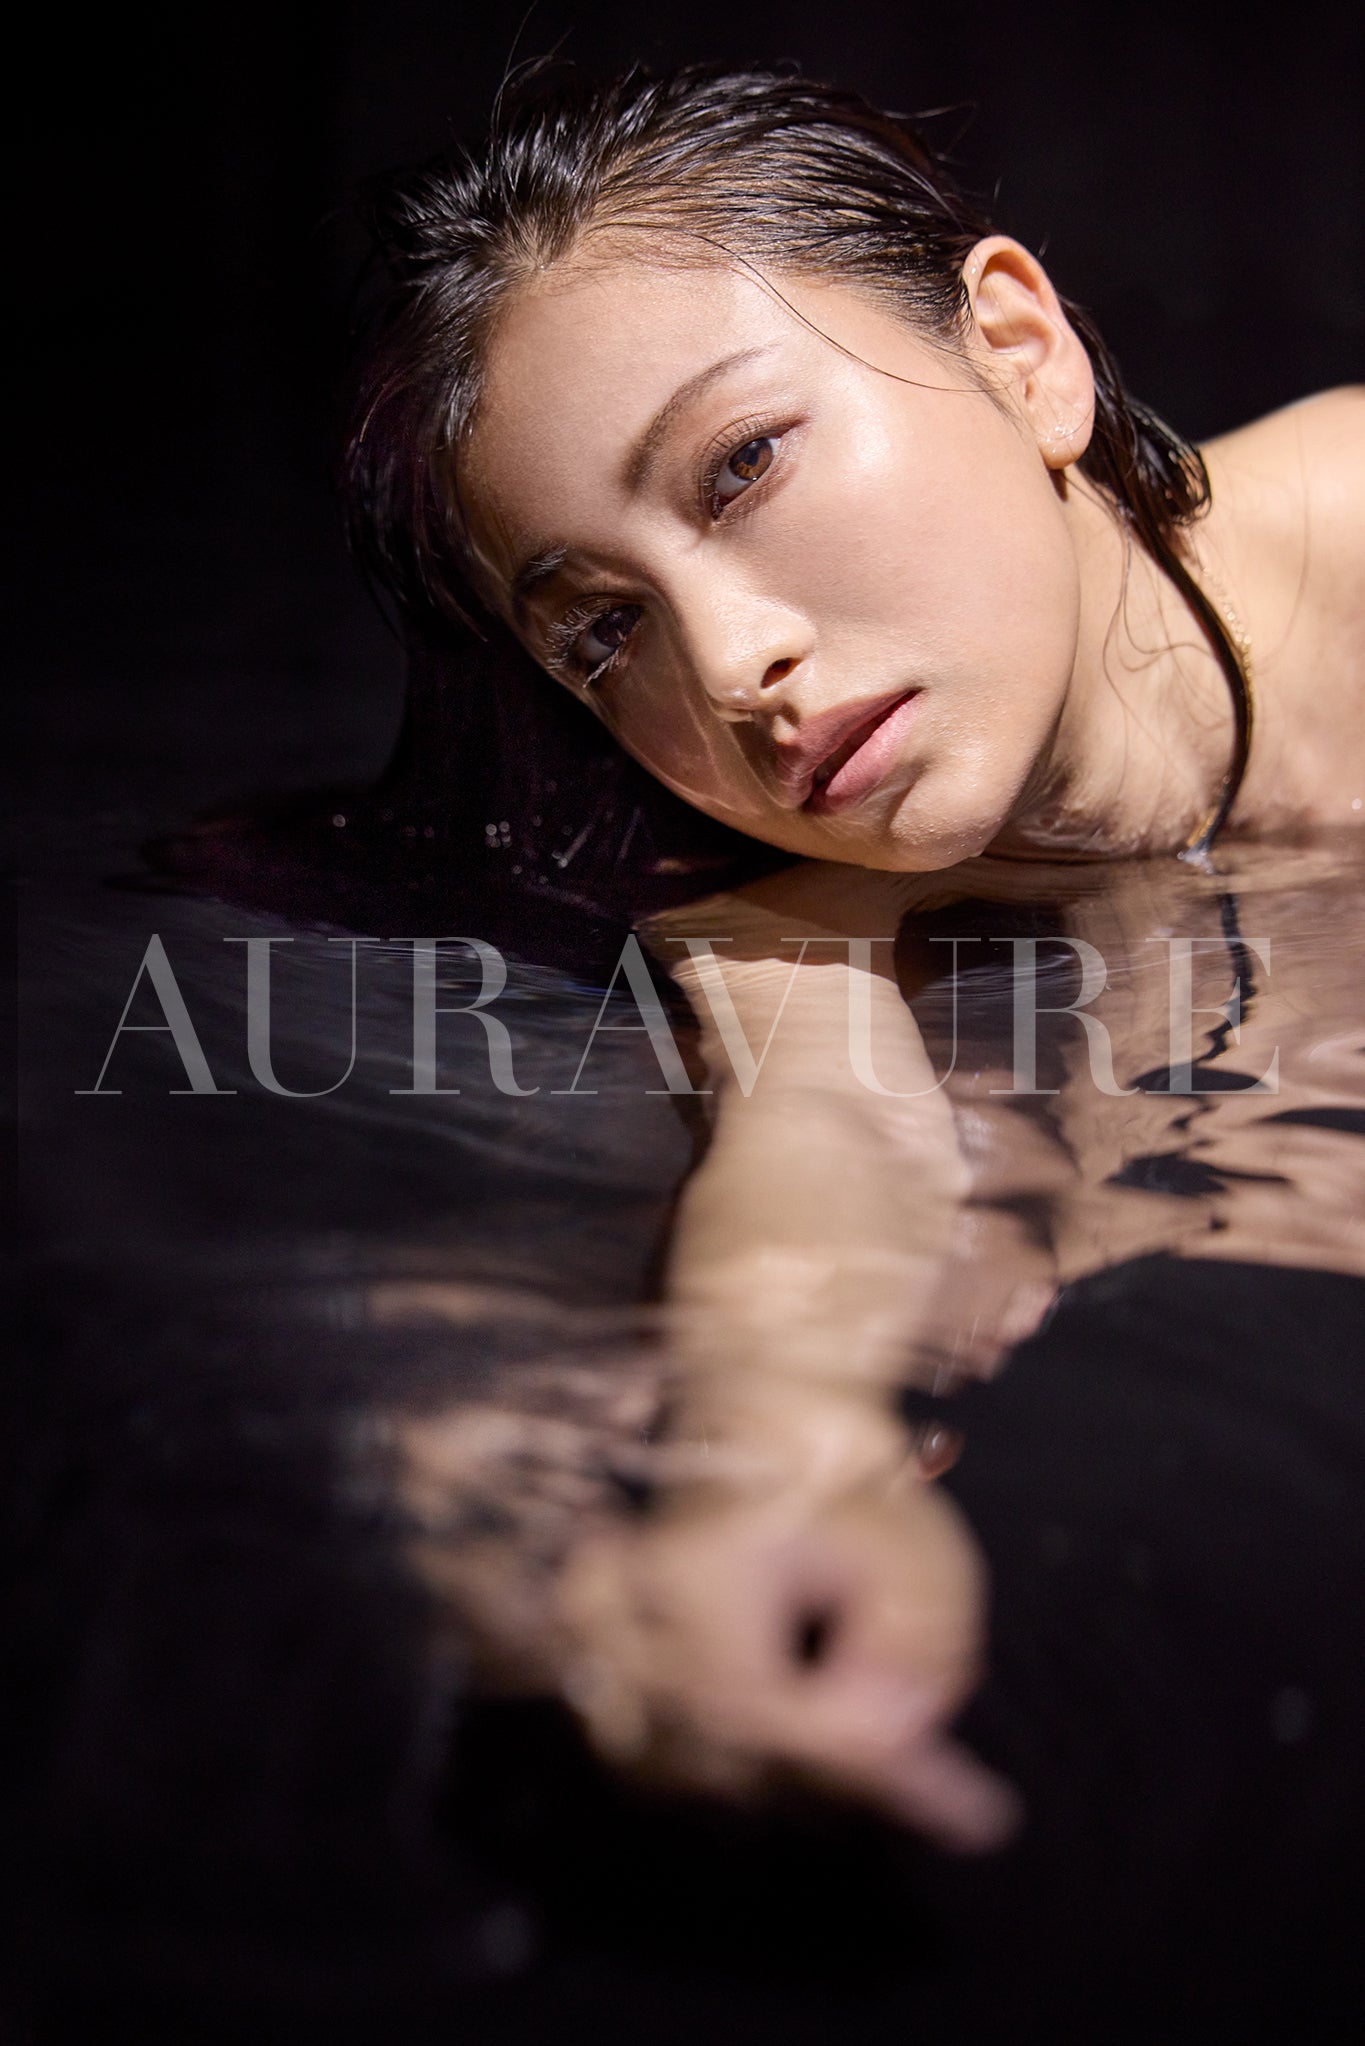 Auravure vol.02. Takara Suzuki Digital Photo book 